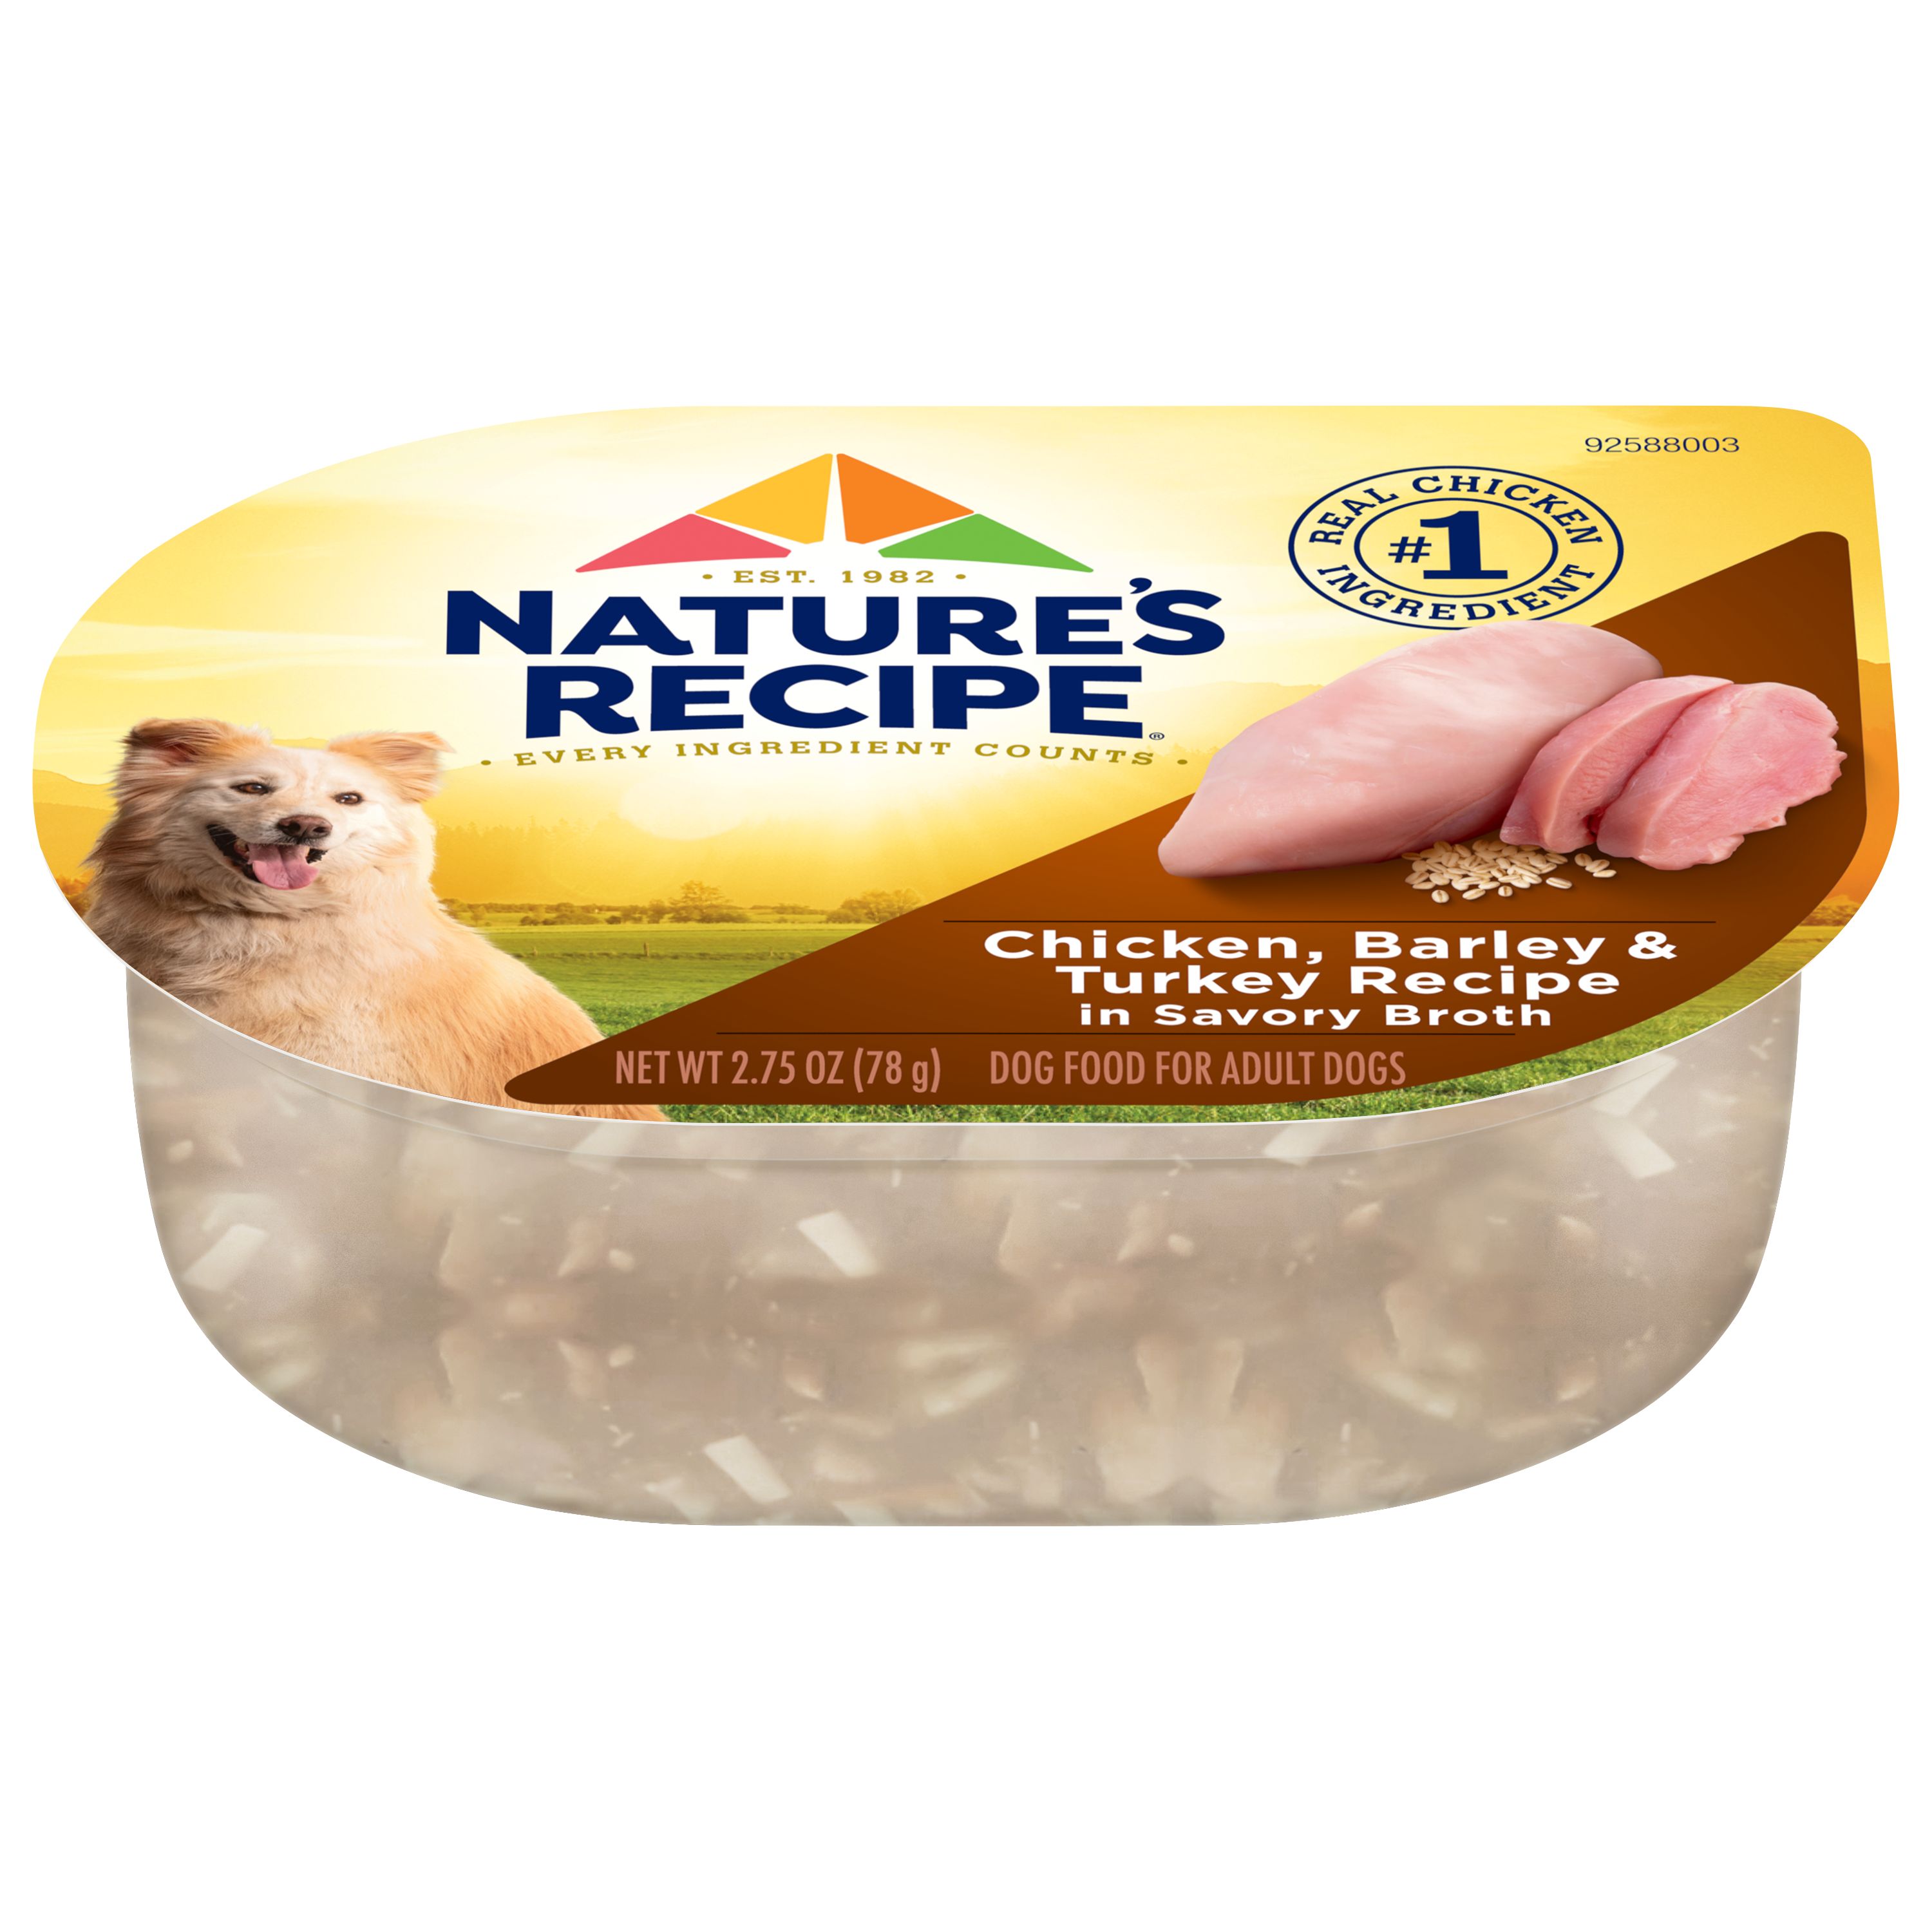 nature's choice dog food